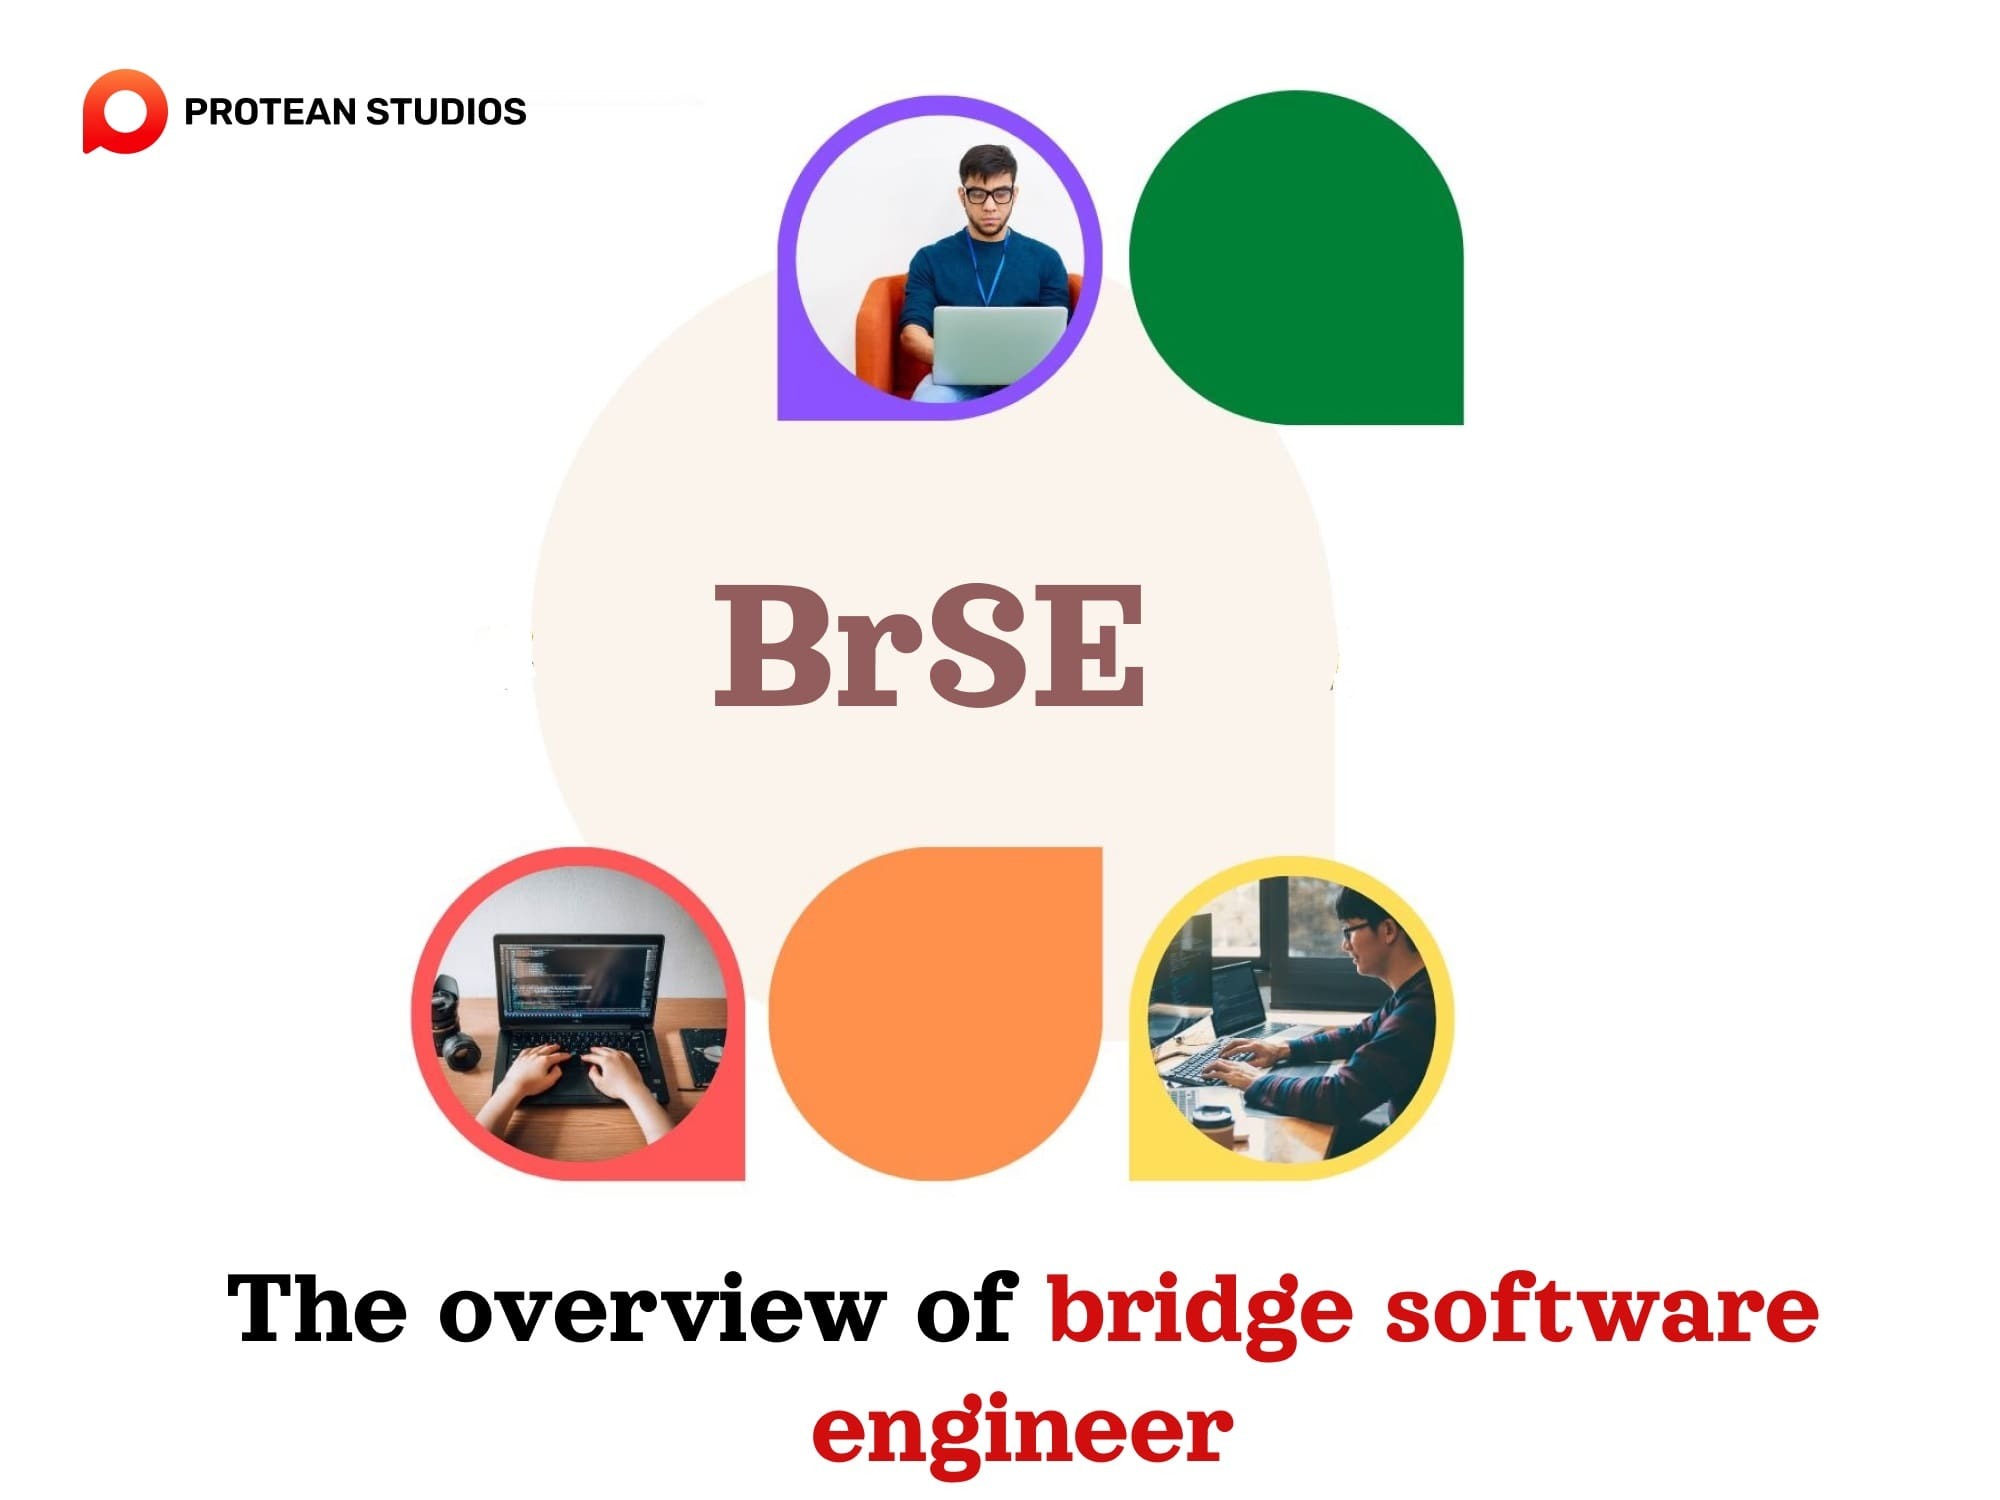 Bridge Software Engineer is a hot job